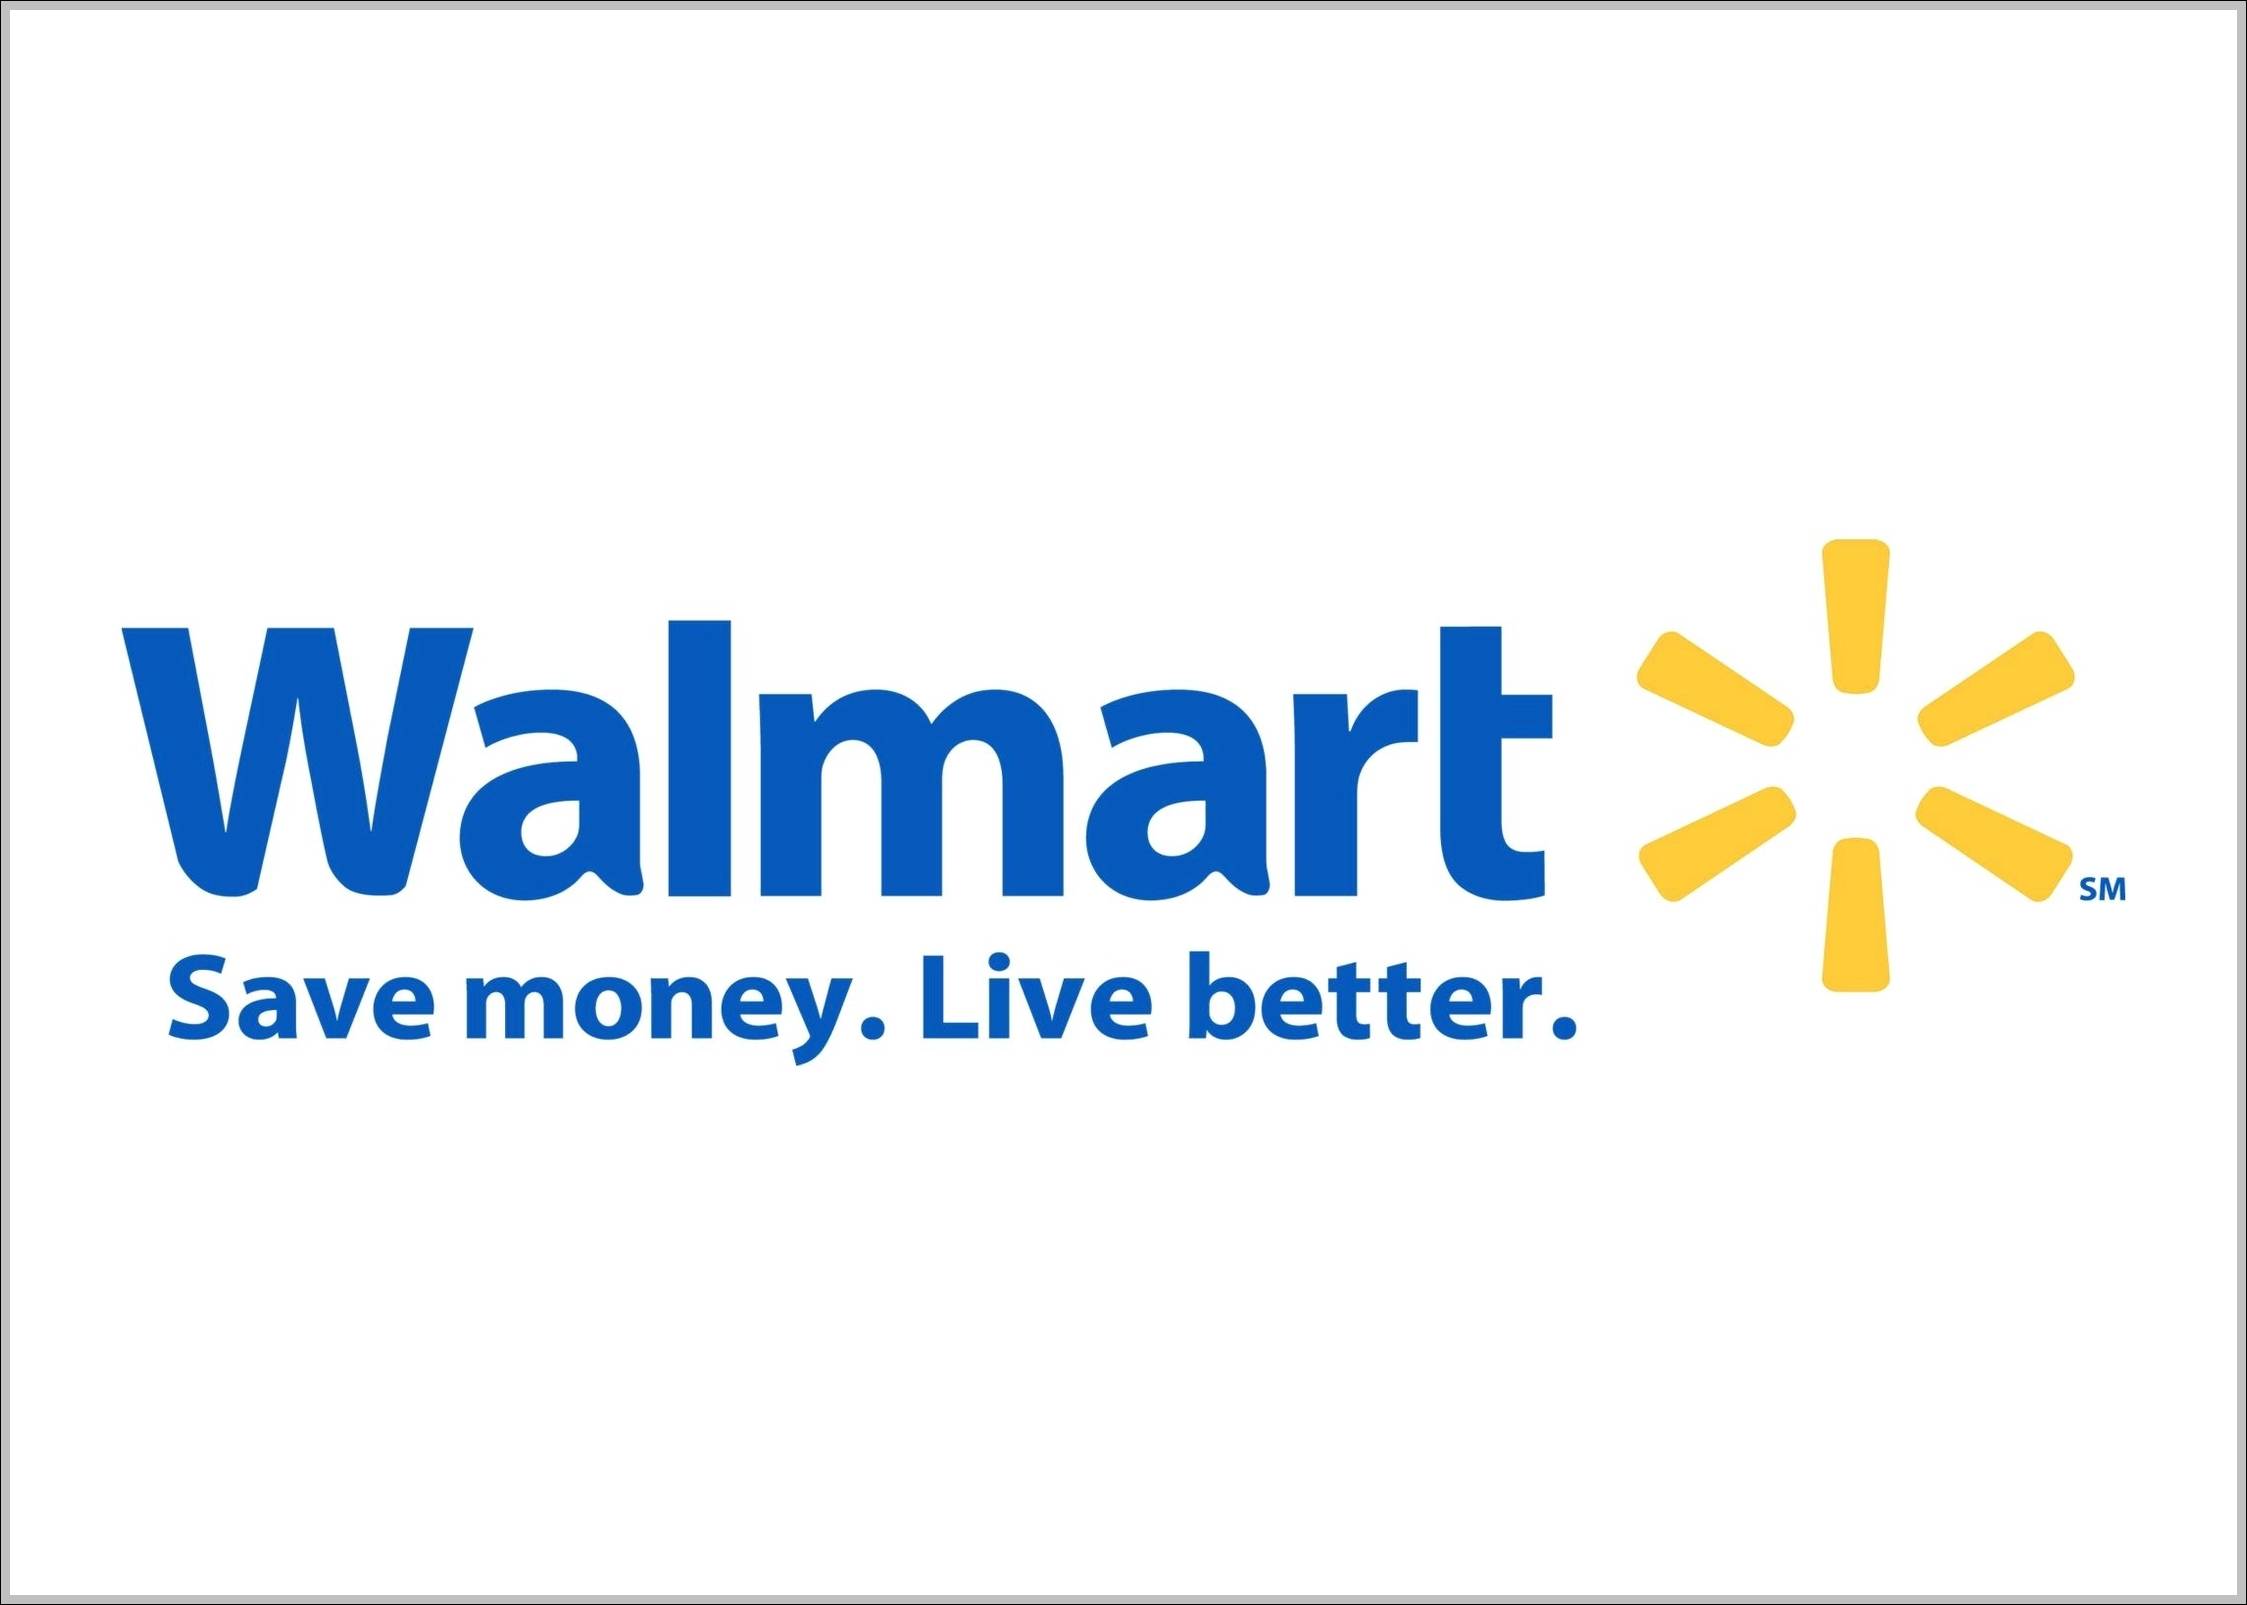 Walmart logo slogan